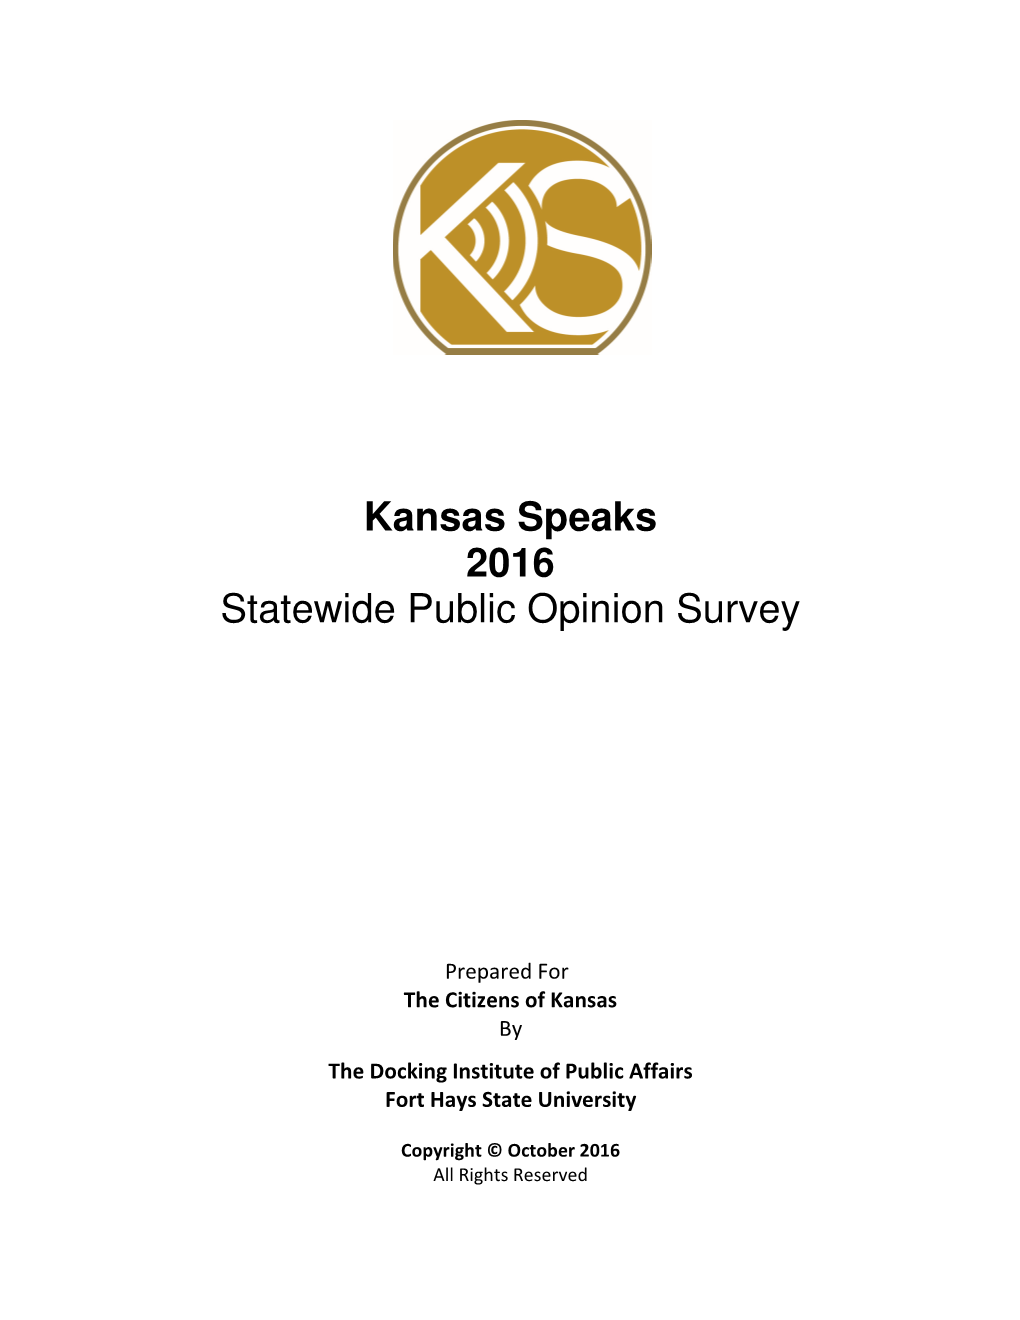 Kansas Speaks 2016 Statewide Public Opinion Survey